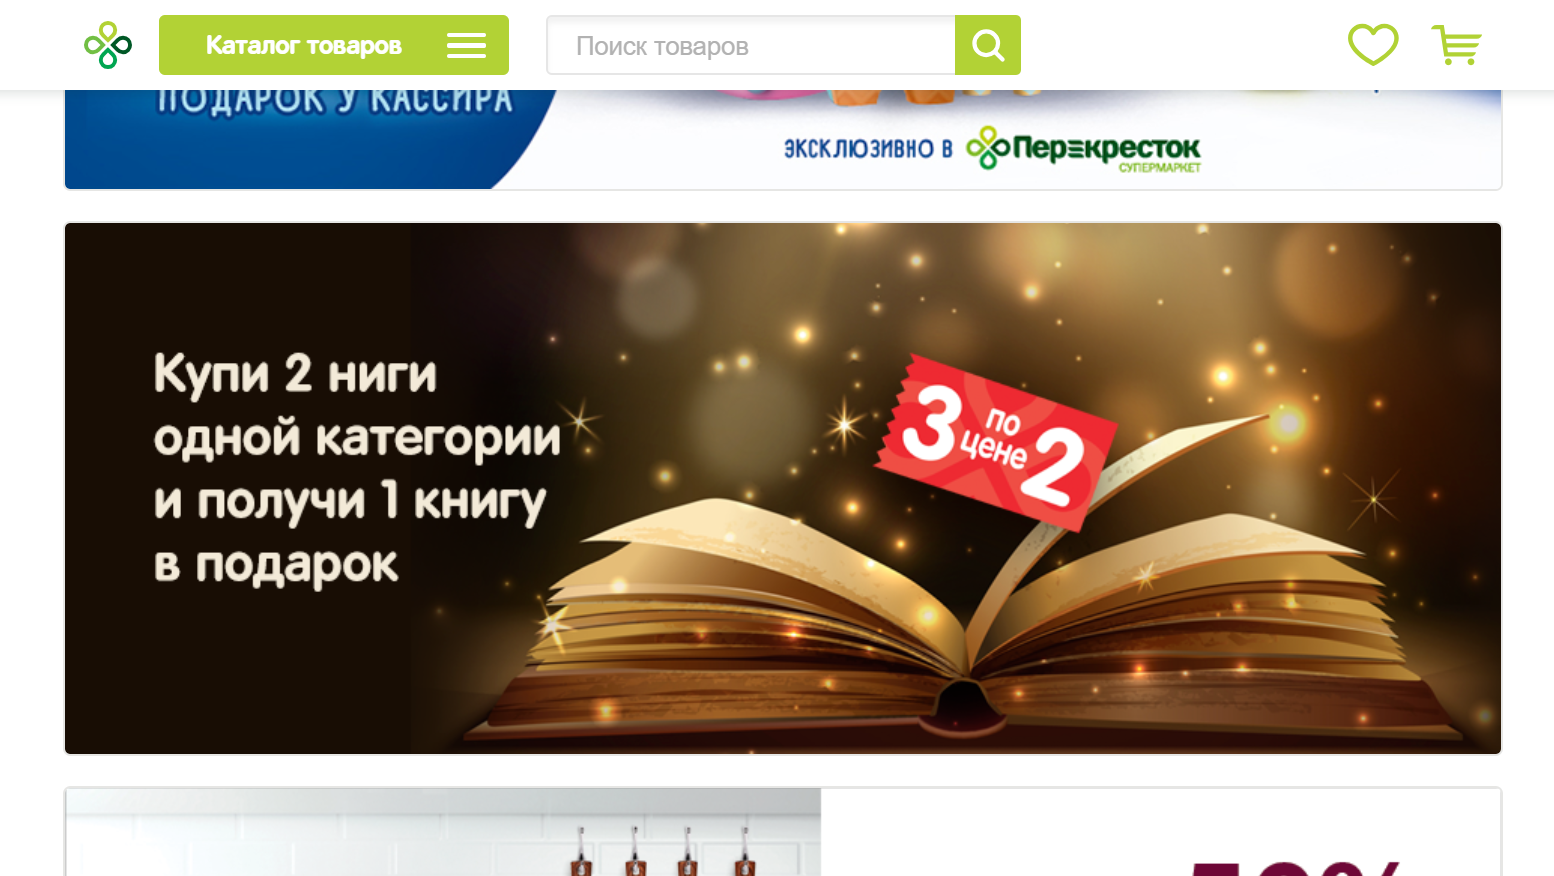 When you decide to buy something - Rukozhop, Screenshot, Stock, Books, Racism, Jamb, Crossroads